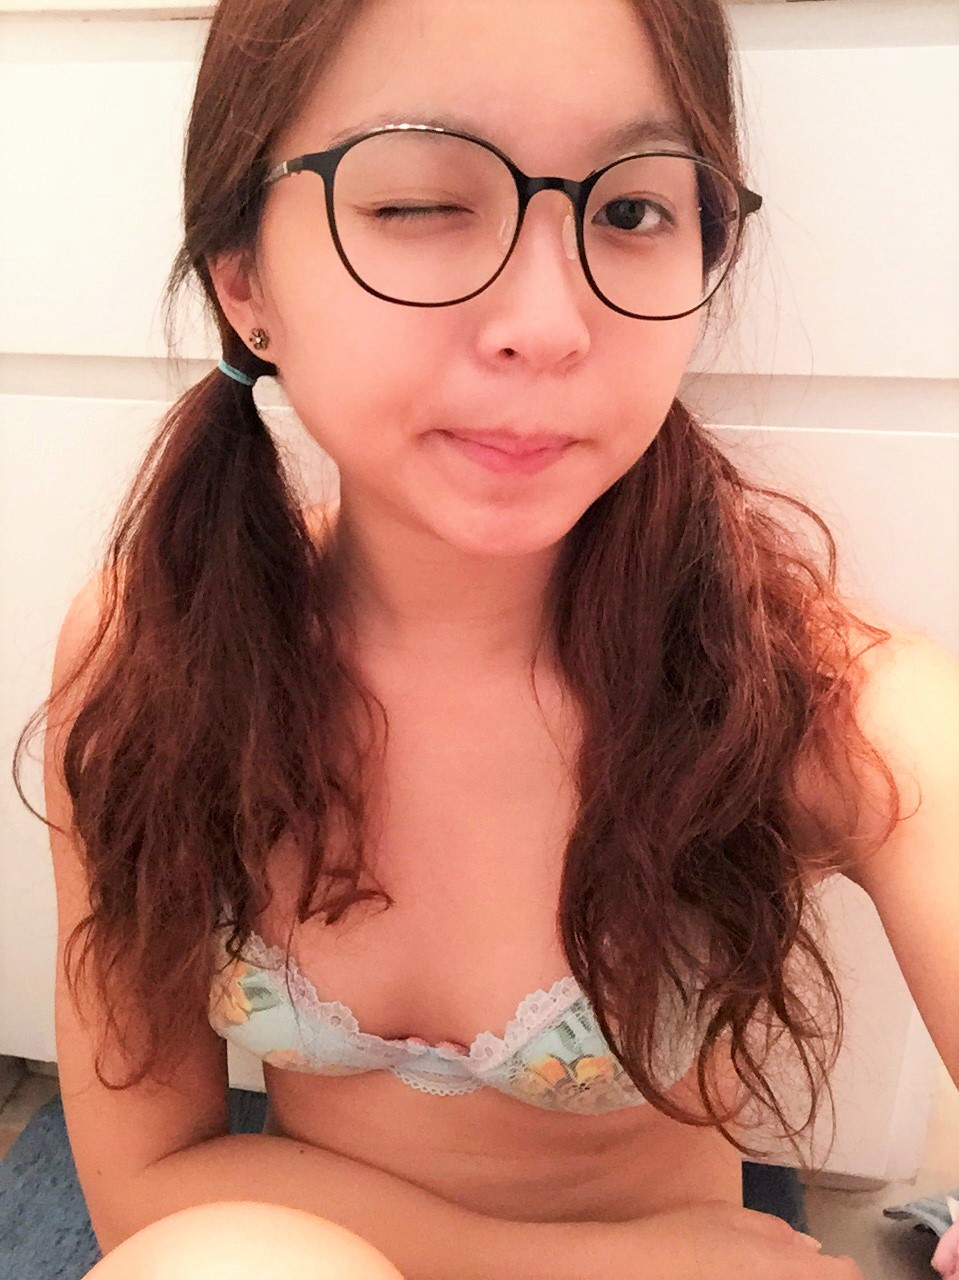 Asian Amateur Selfie Tits - Petite Asian Teen Takes Nude Selfies - HT4jtBT Porn Pic - EPORNER